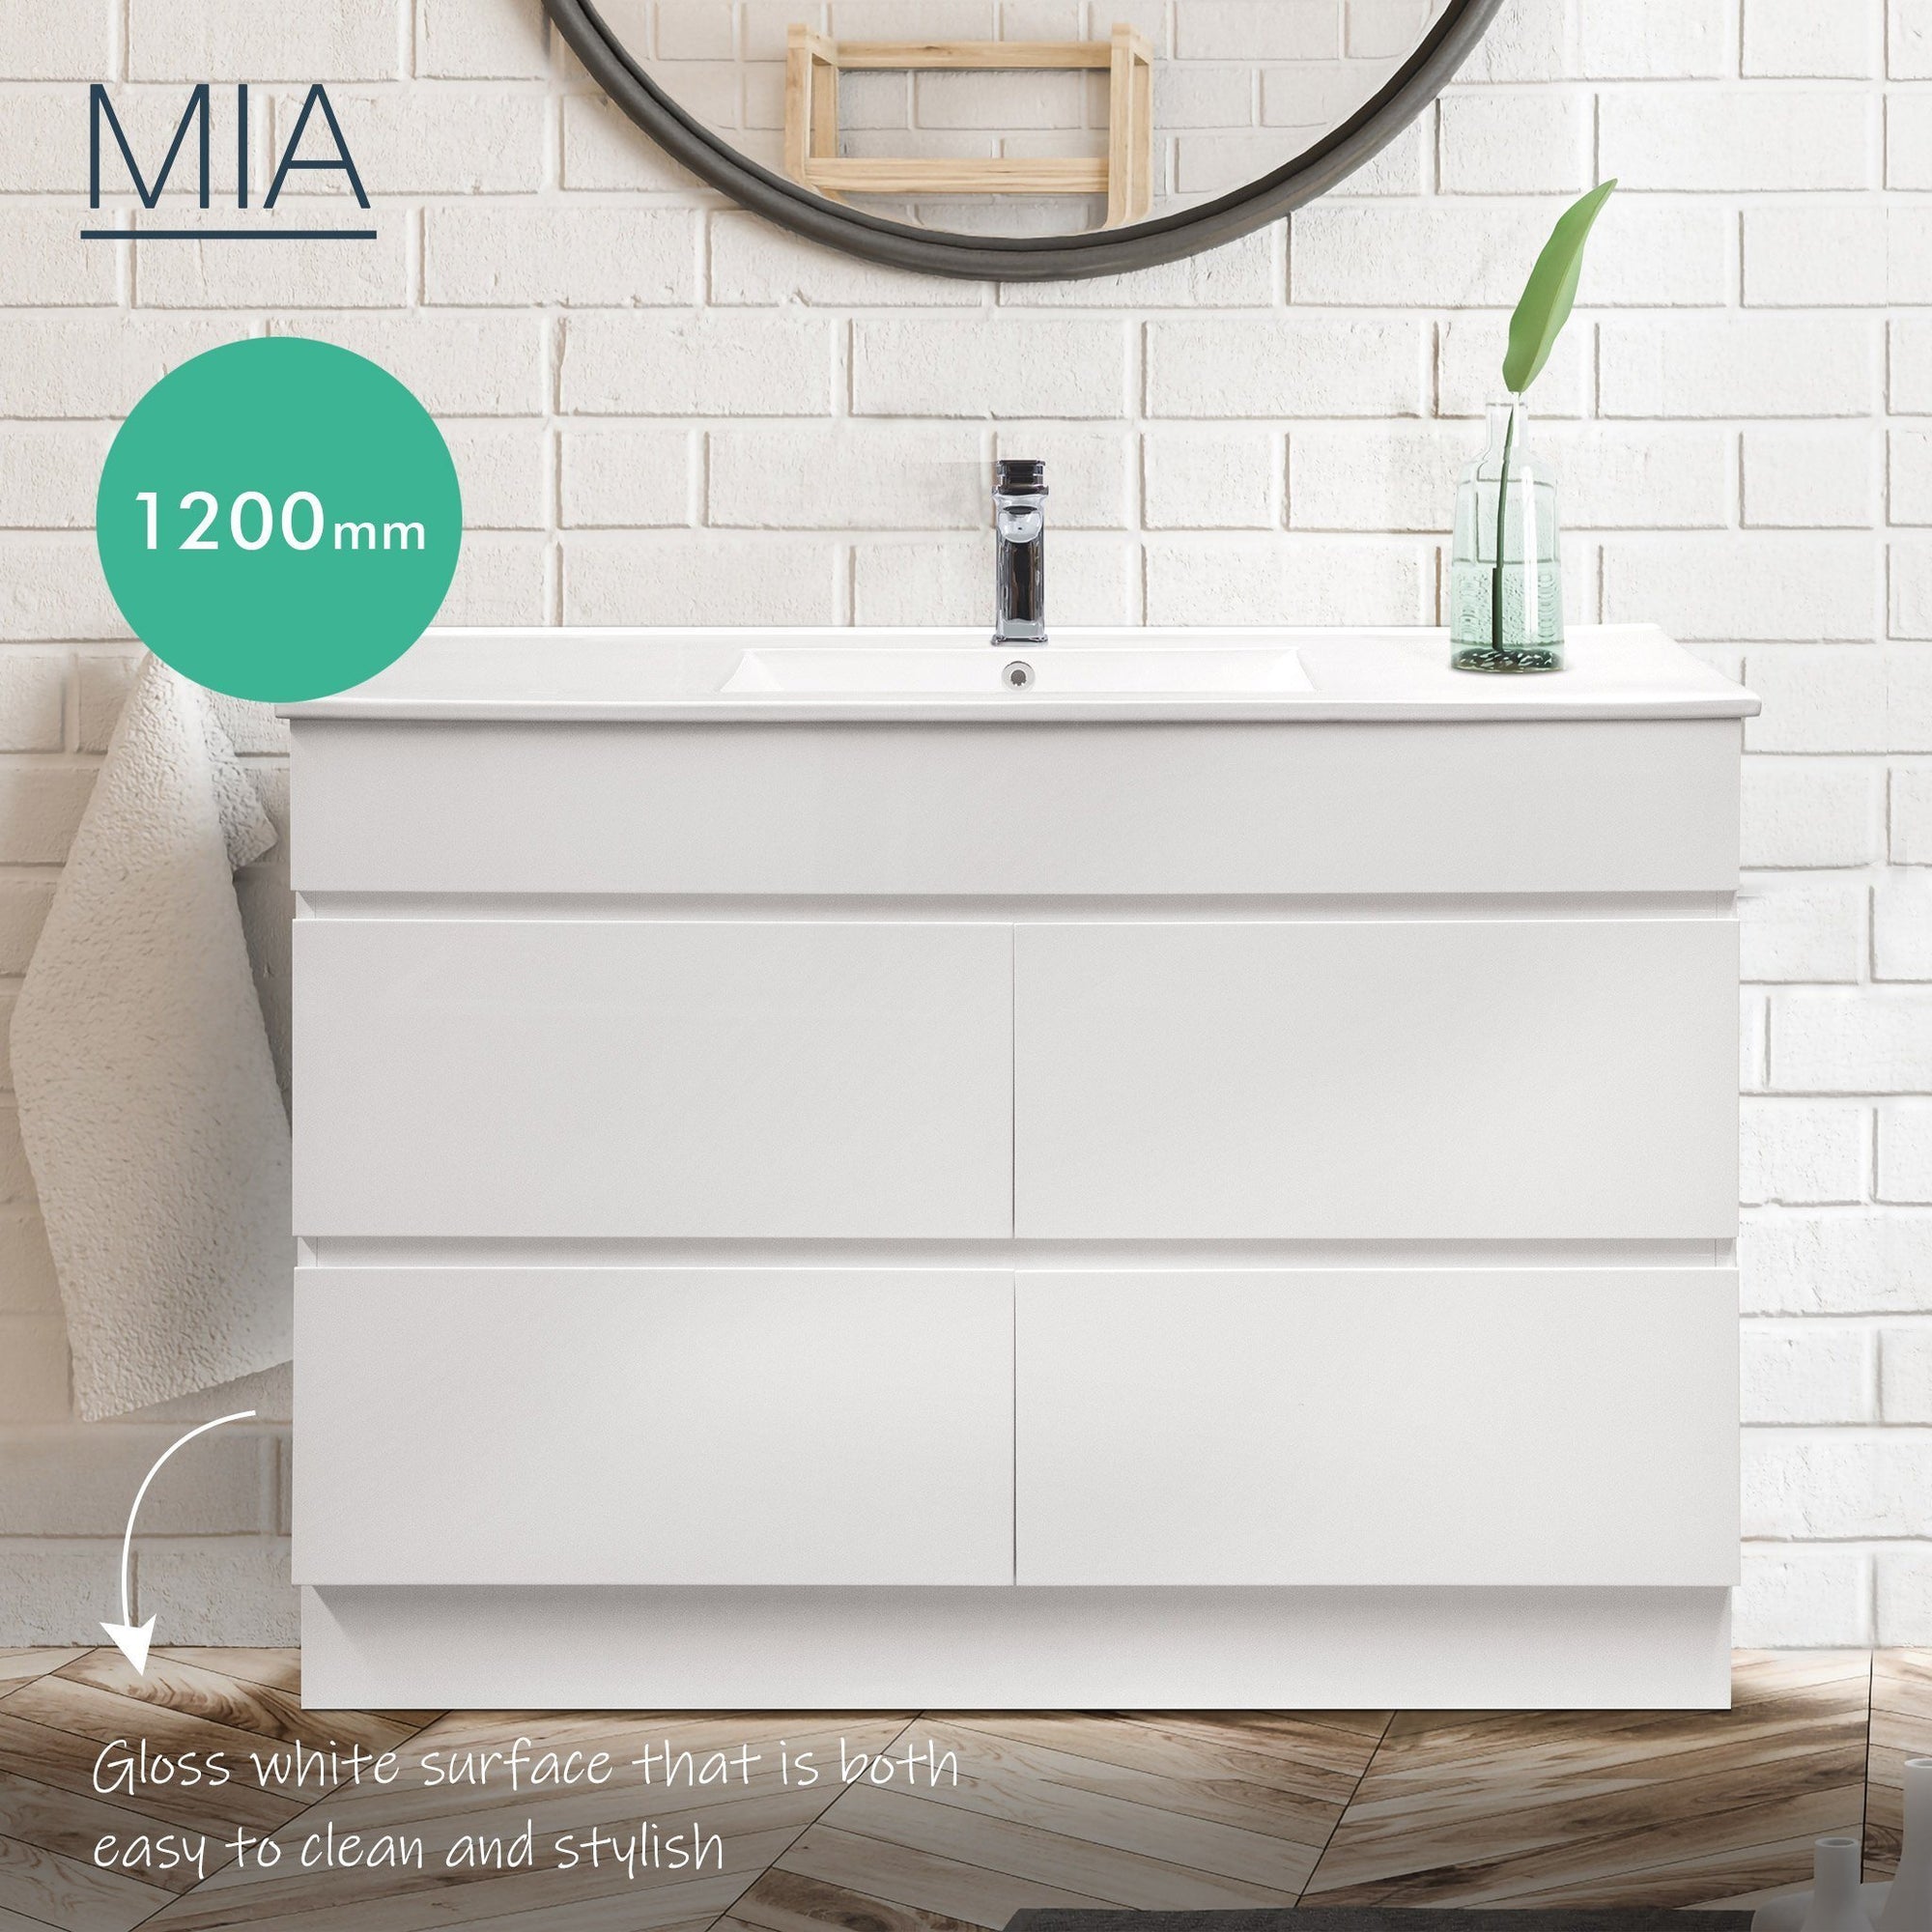 Mia 120cm Free Standing Bathroom Vanity - Single Bowl Vanities & Mirrors Arova Bliss Quartz Stone Top CB1201N-Square Gloss White Basin 